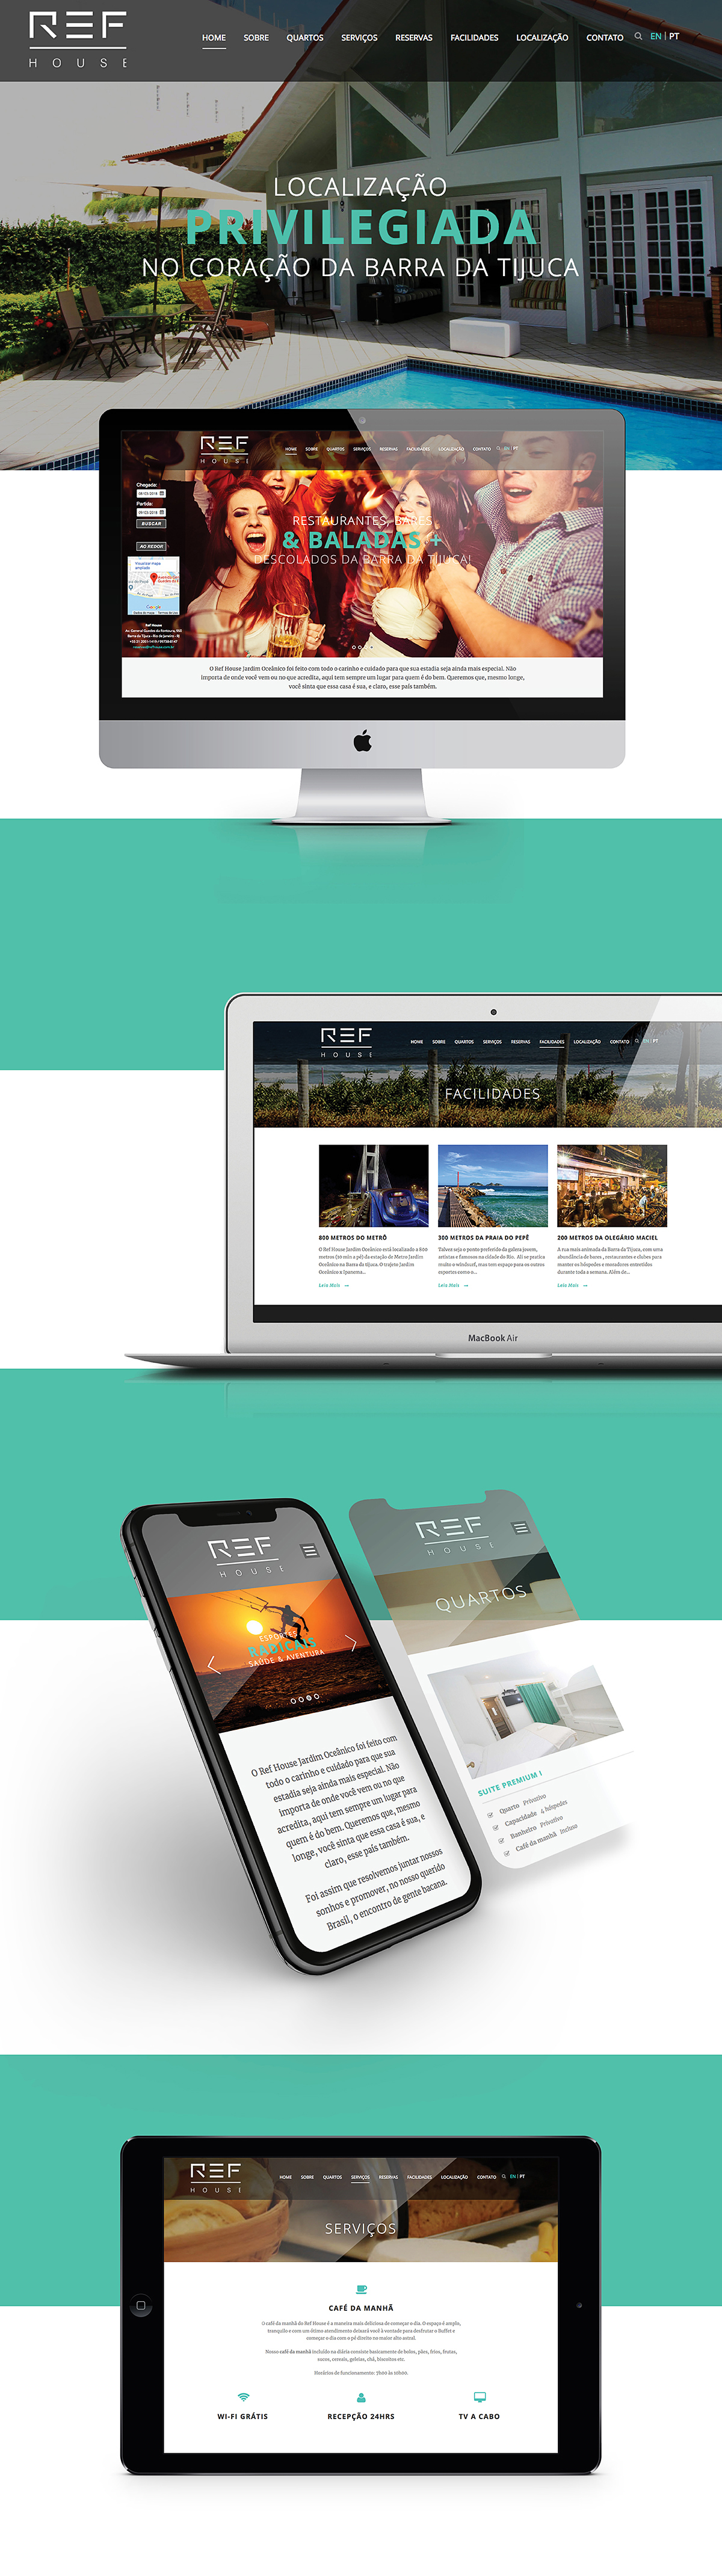 Web Design  Website wordpress graphic design  ux UI Interface hostel hotel Rio de Janeiro